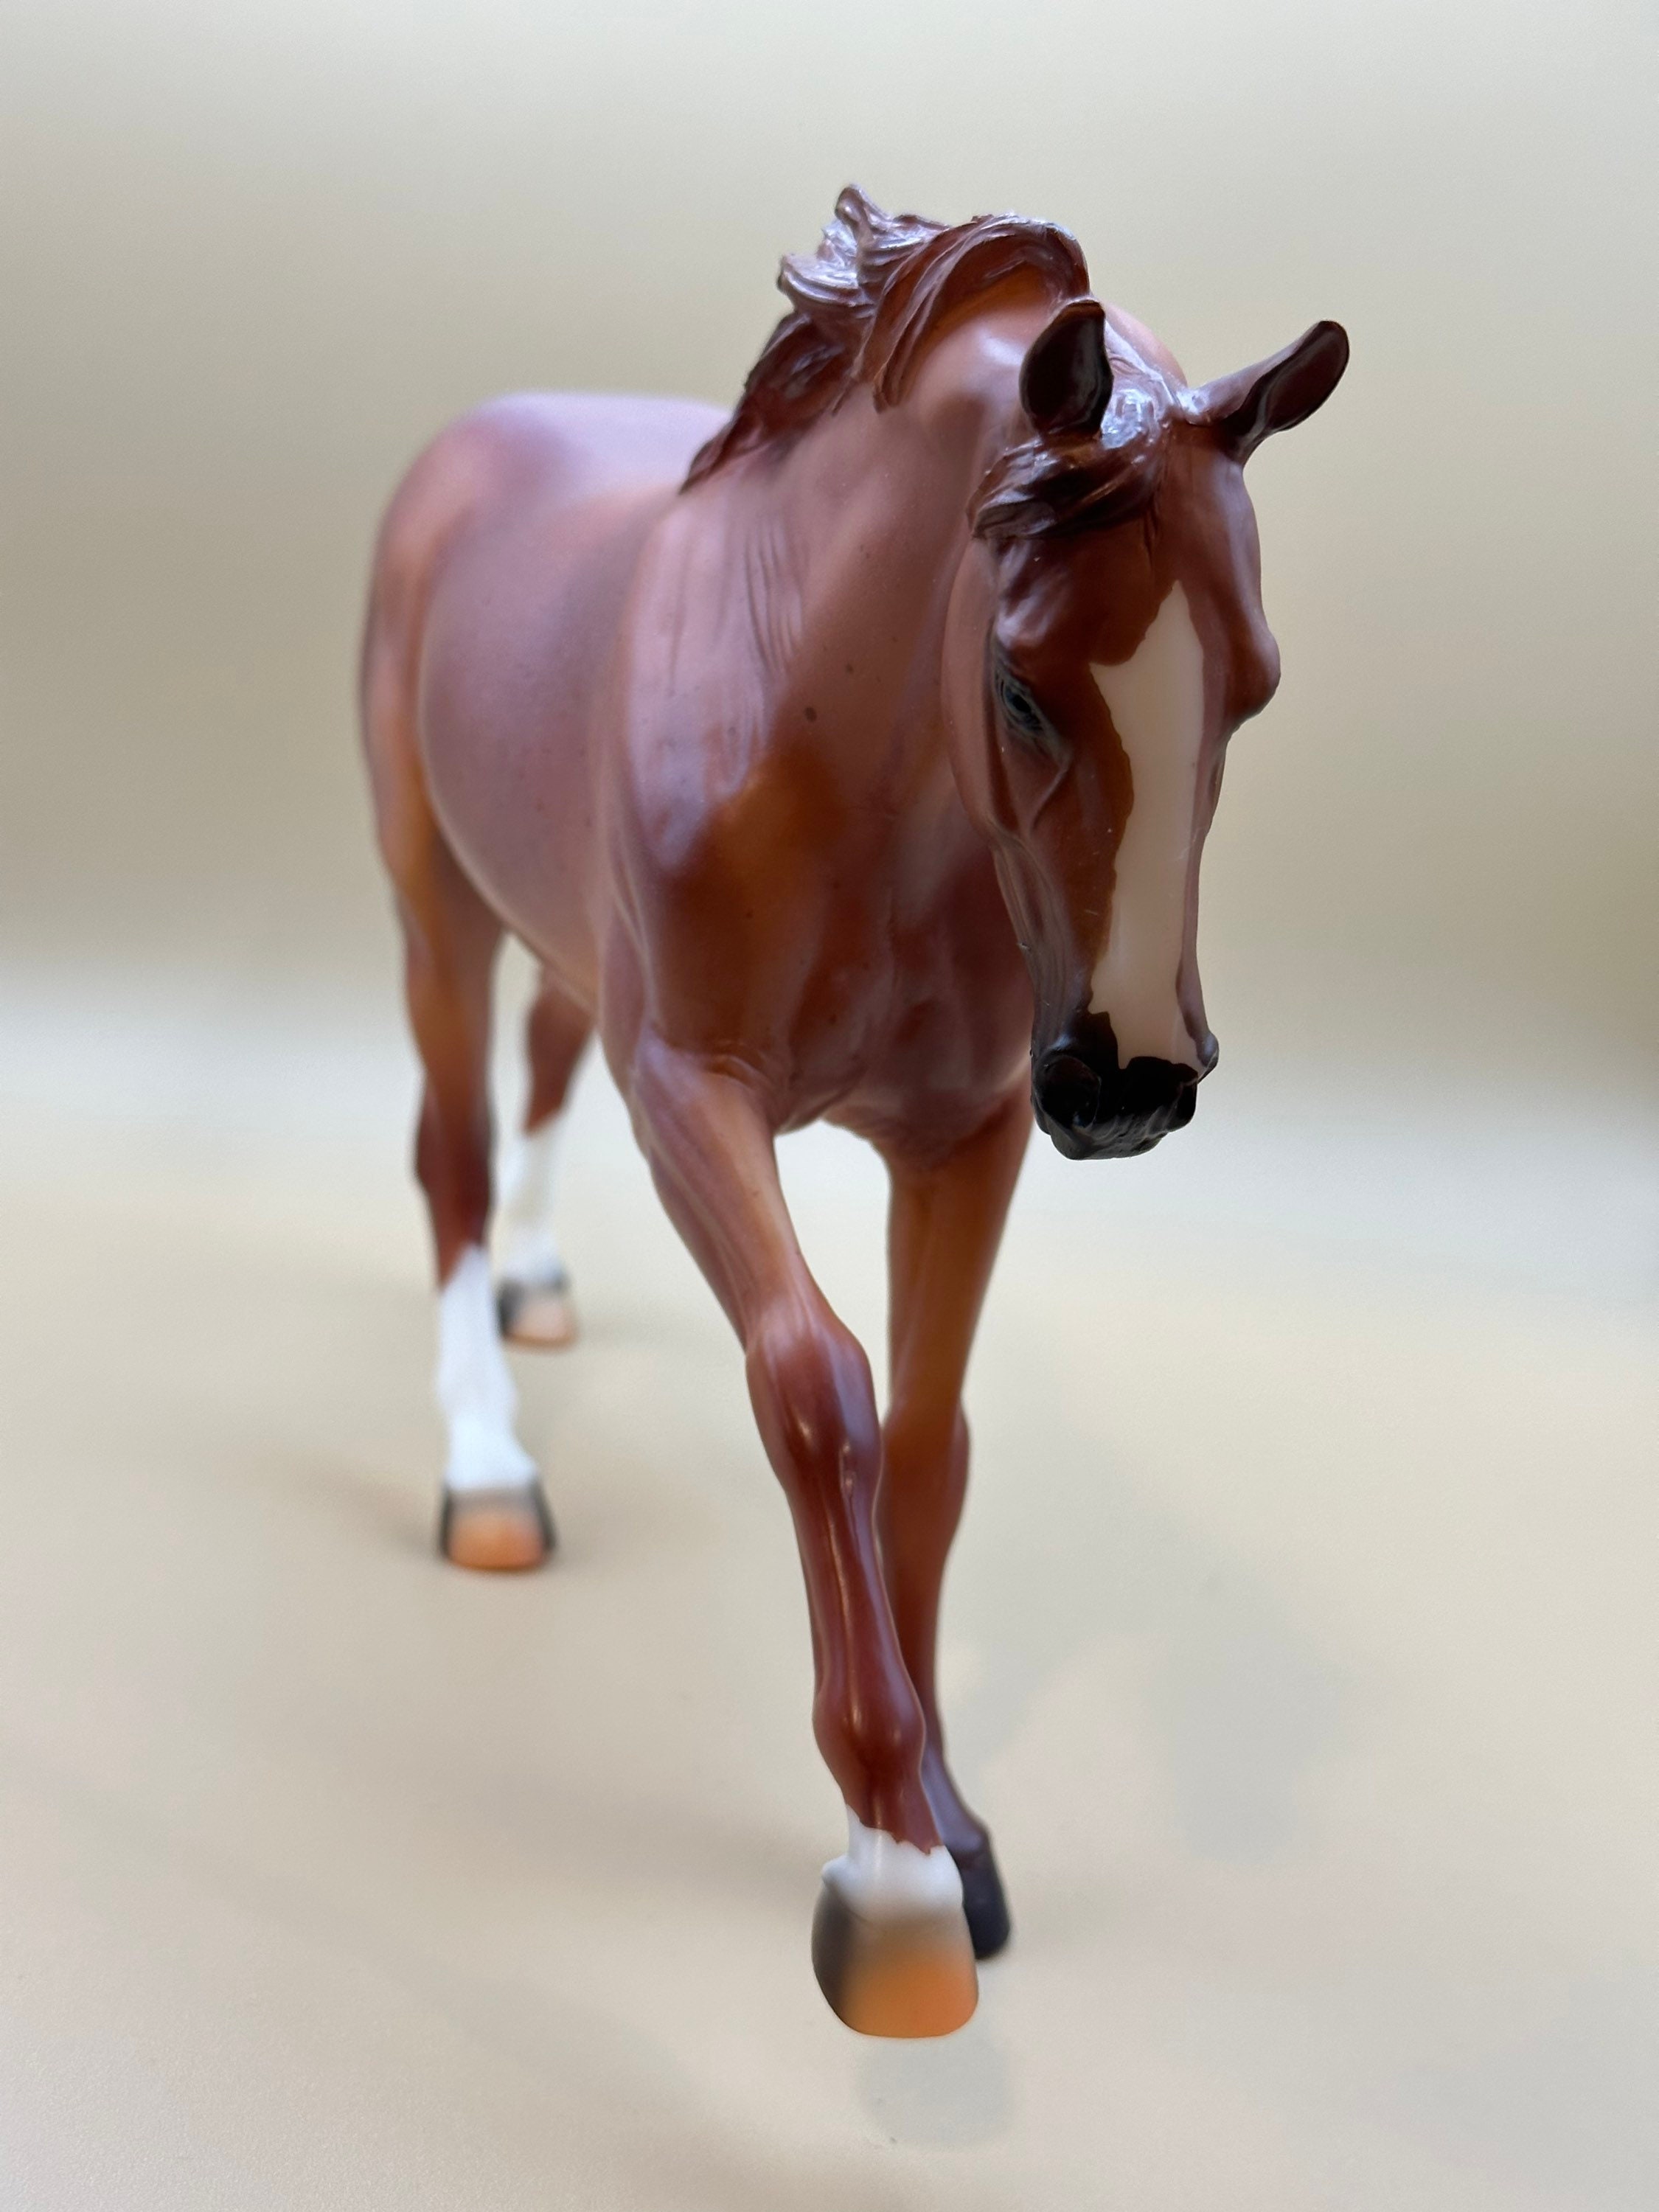 Breyer Peptoboonsmal Traditional Horse